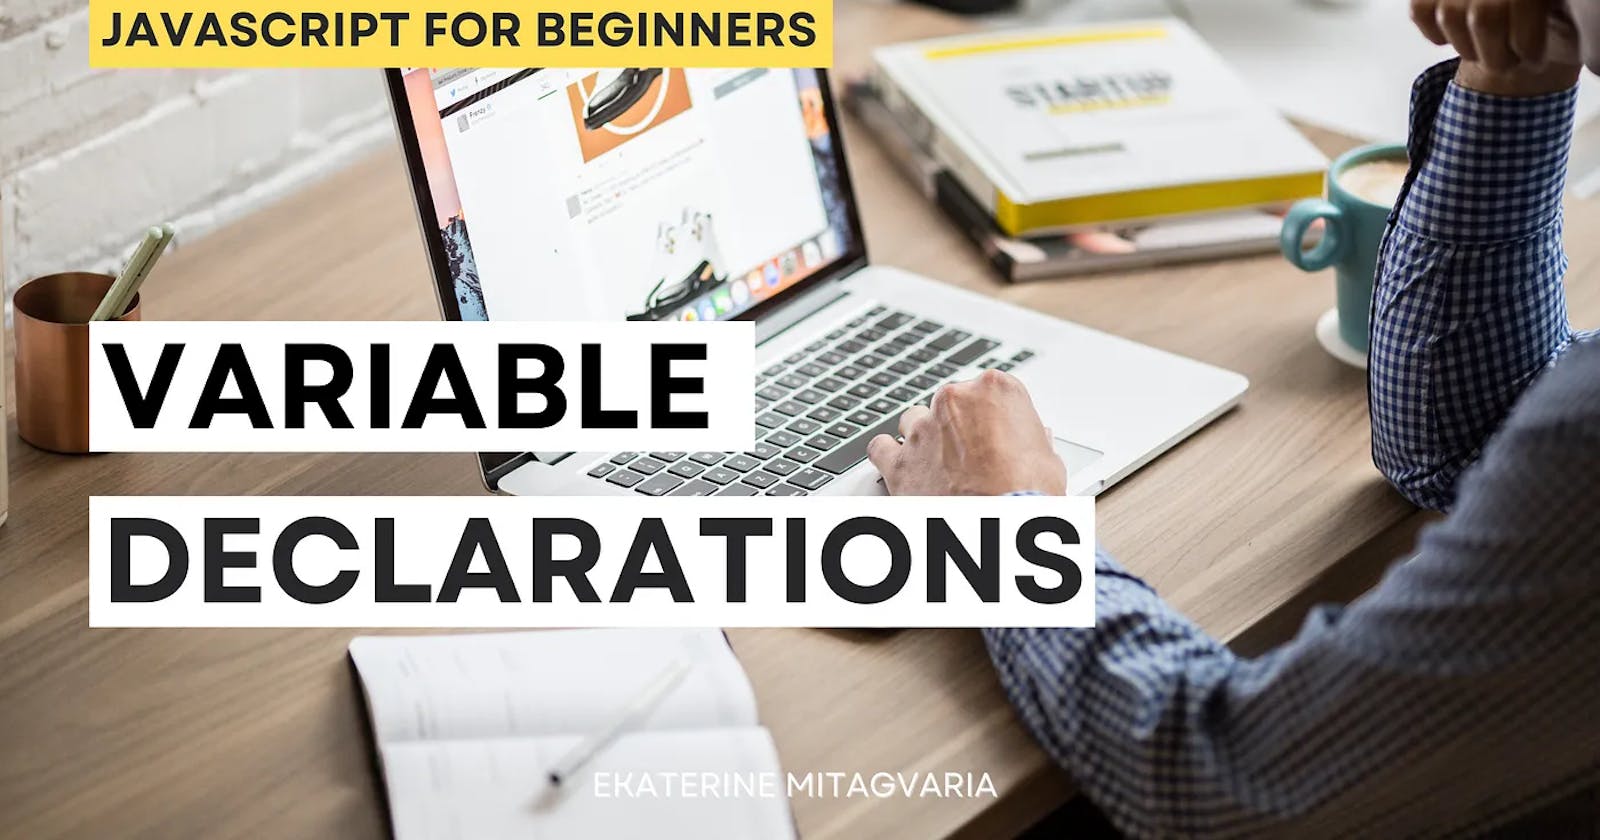 JavaScript for Beginners: Variable Declarations